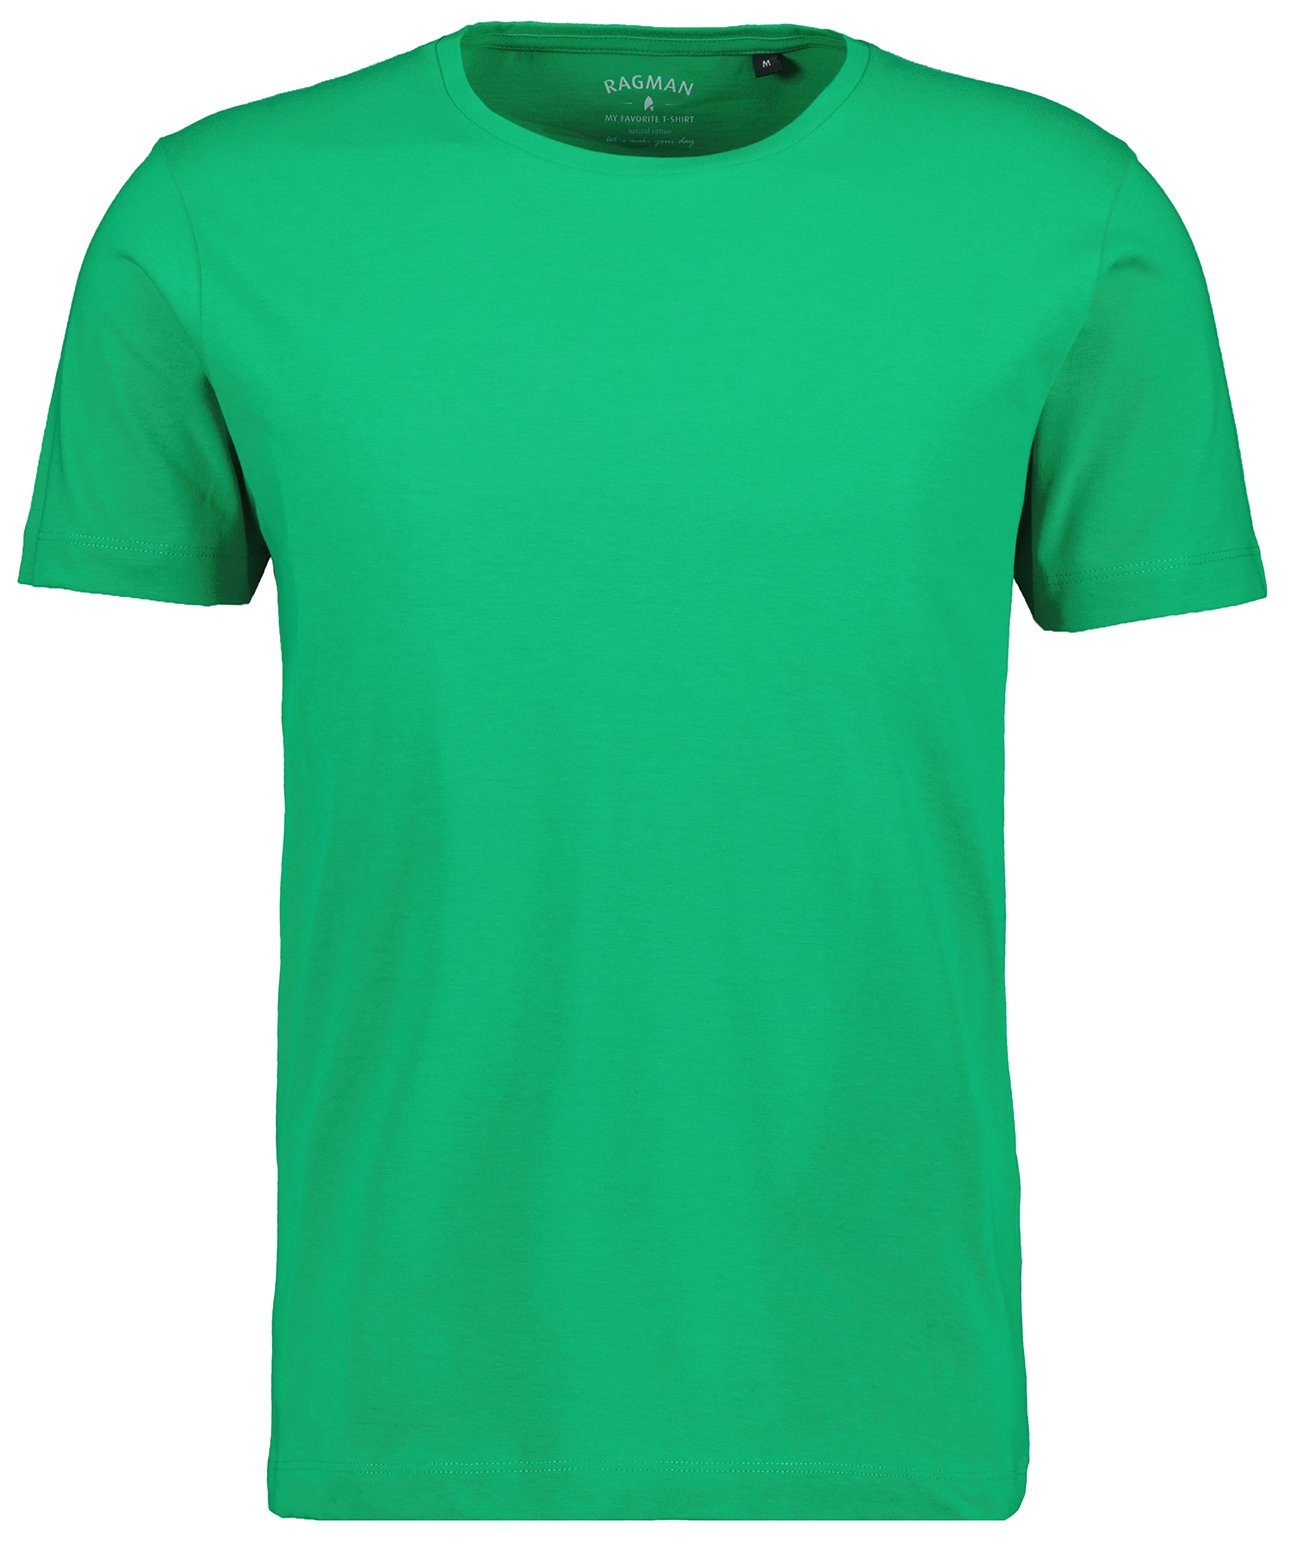 RAGMAN Electric T-Shirt Green-394